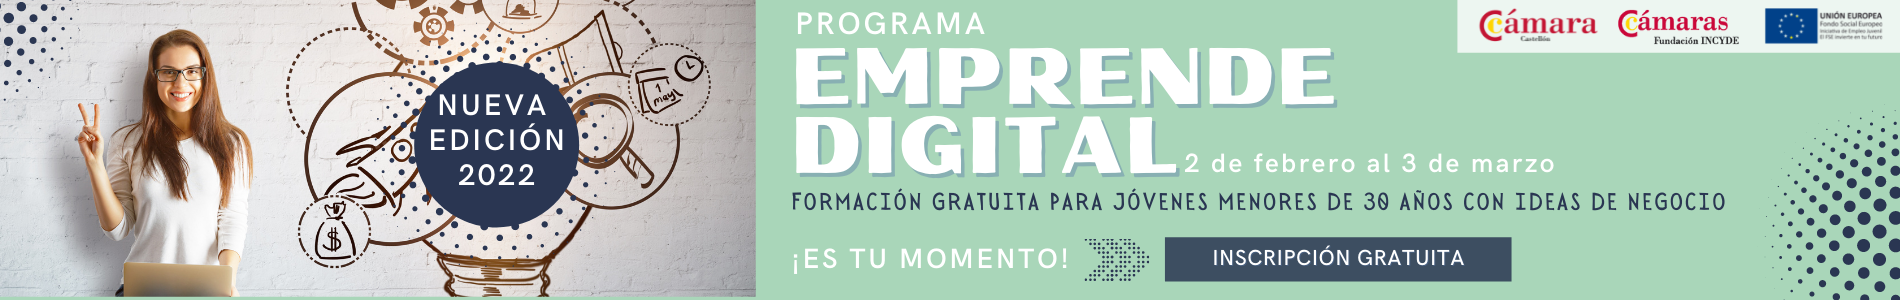 Programa Emprende Digital. Edición I